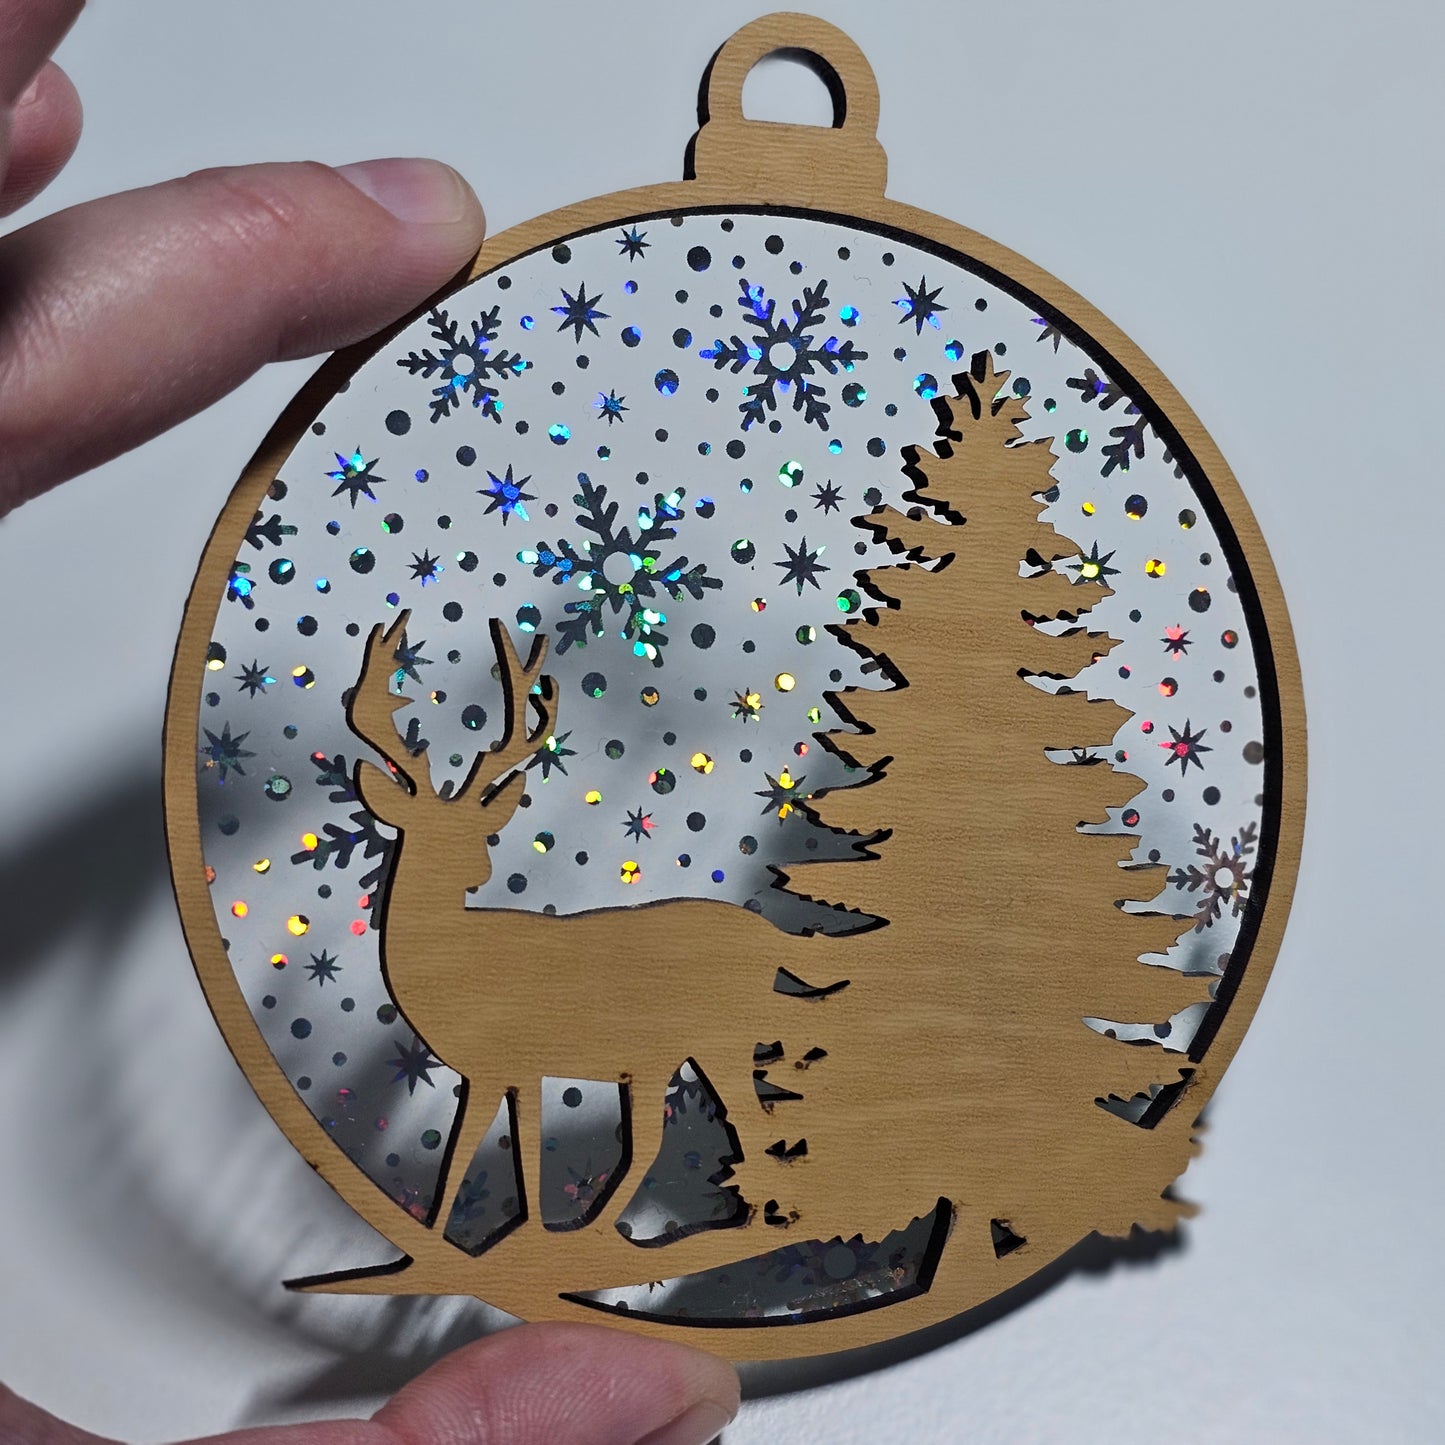 Deer Ornament - Translucent Iridescent Snowflakes